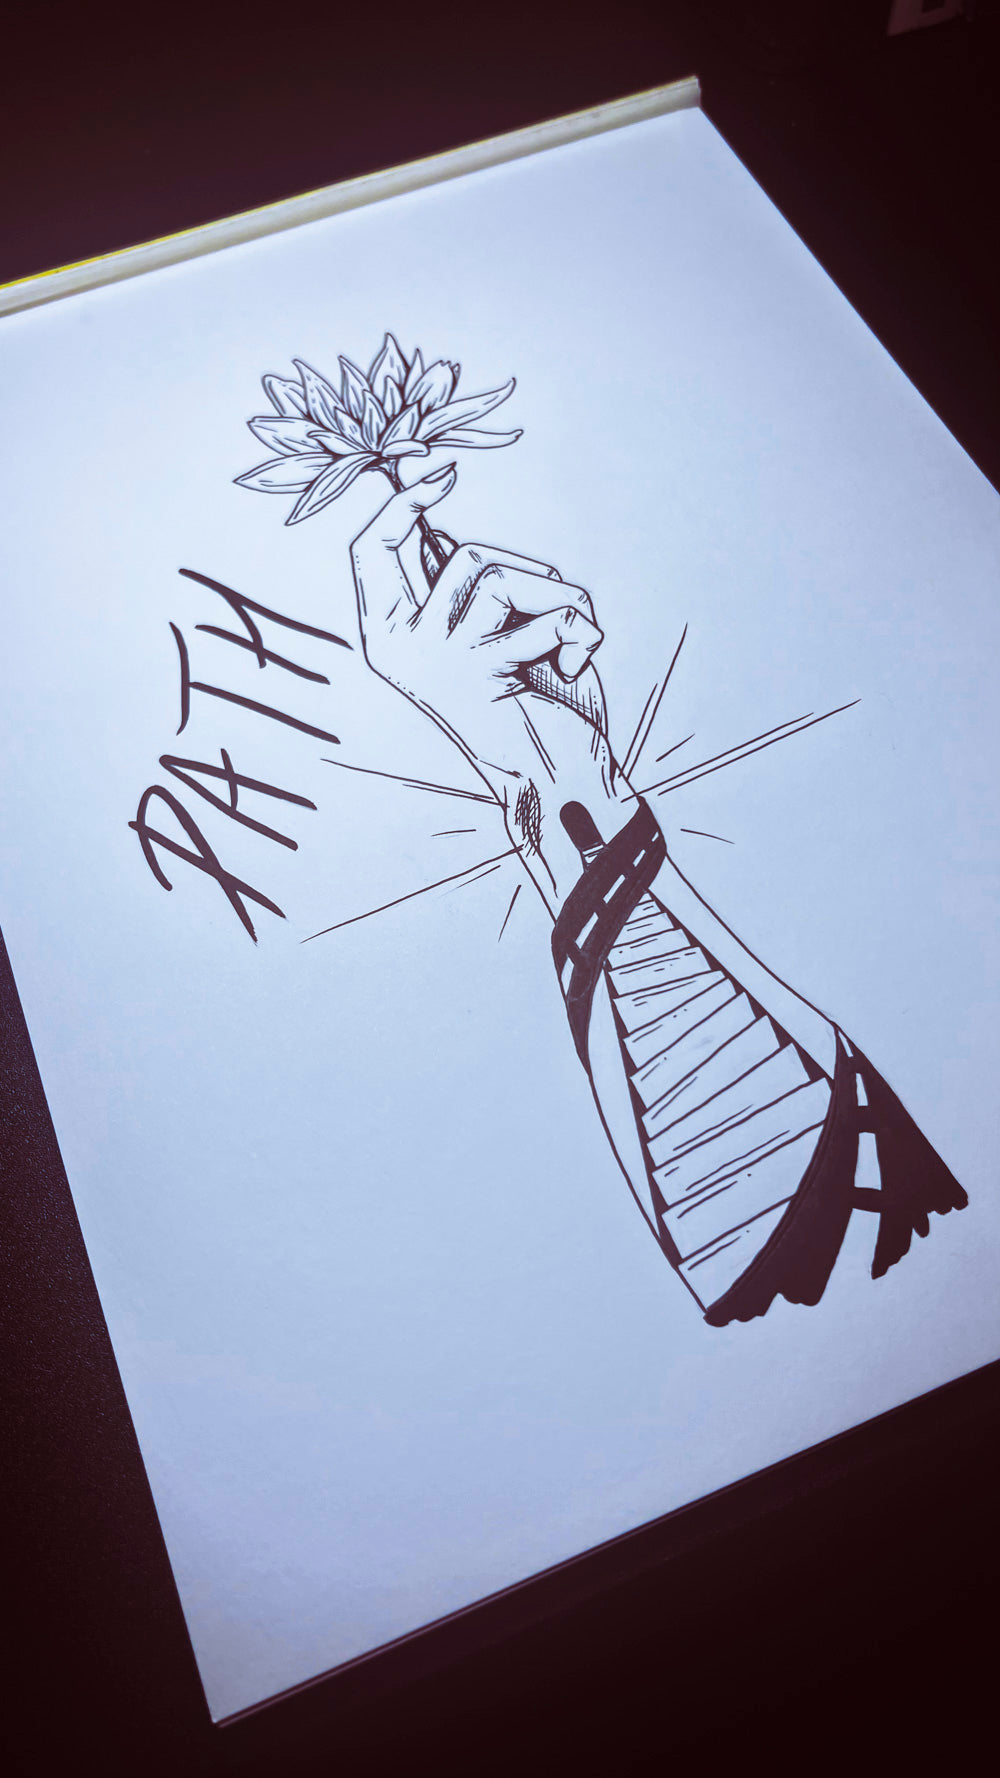 Symbolism in art - 7 Meaningful Tattoo Ideas